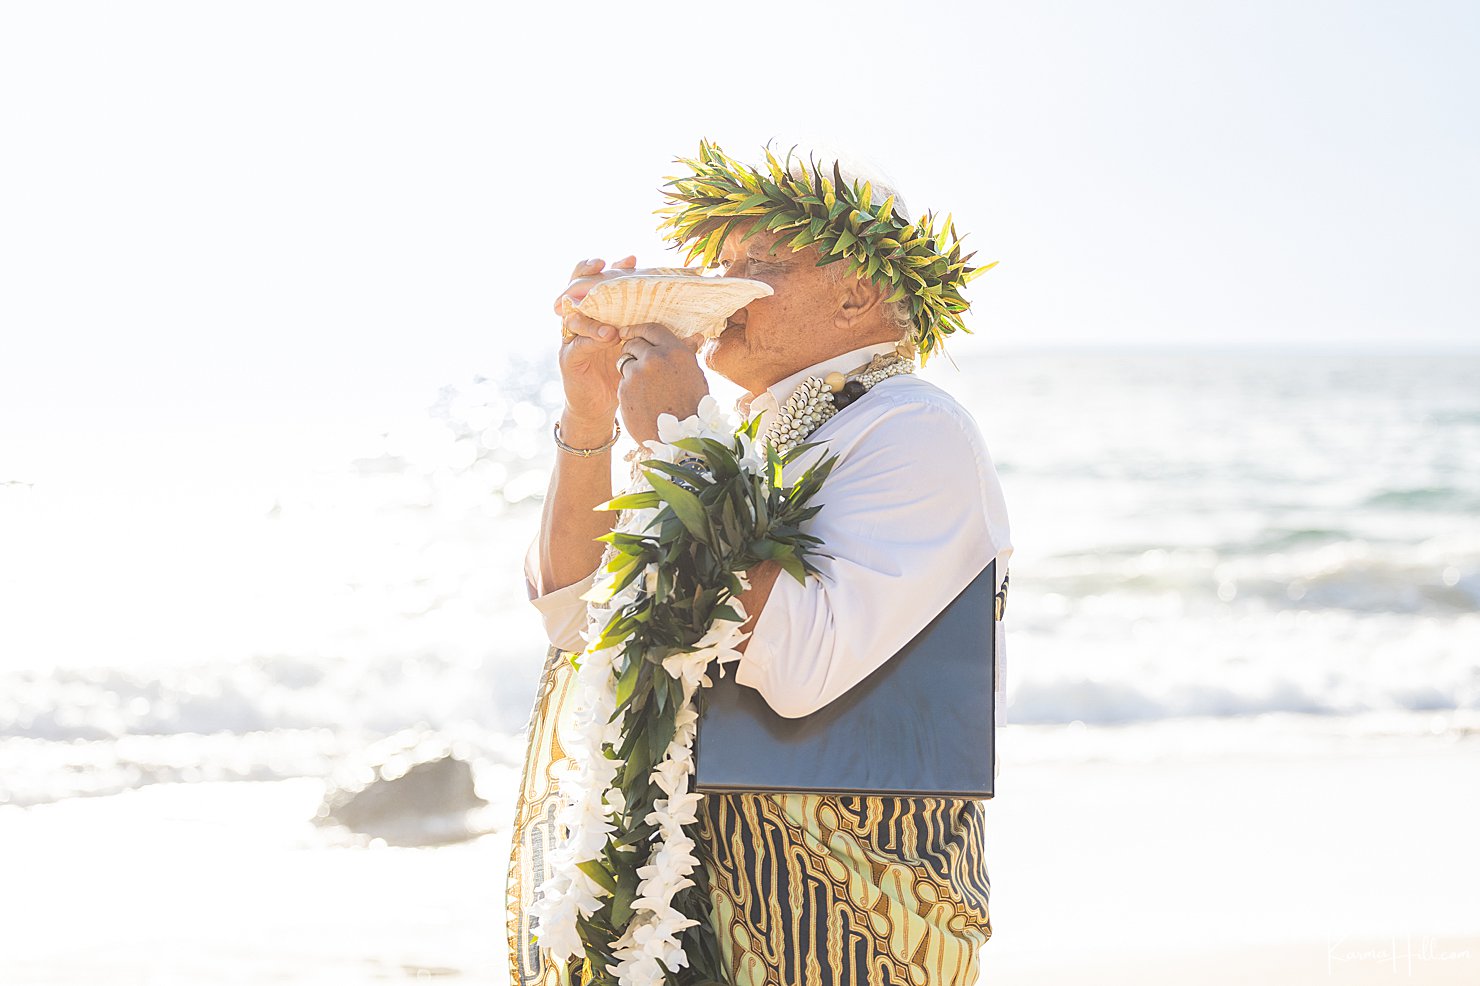 Maui Wedding Minister